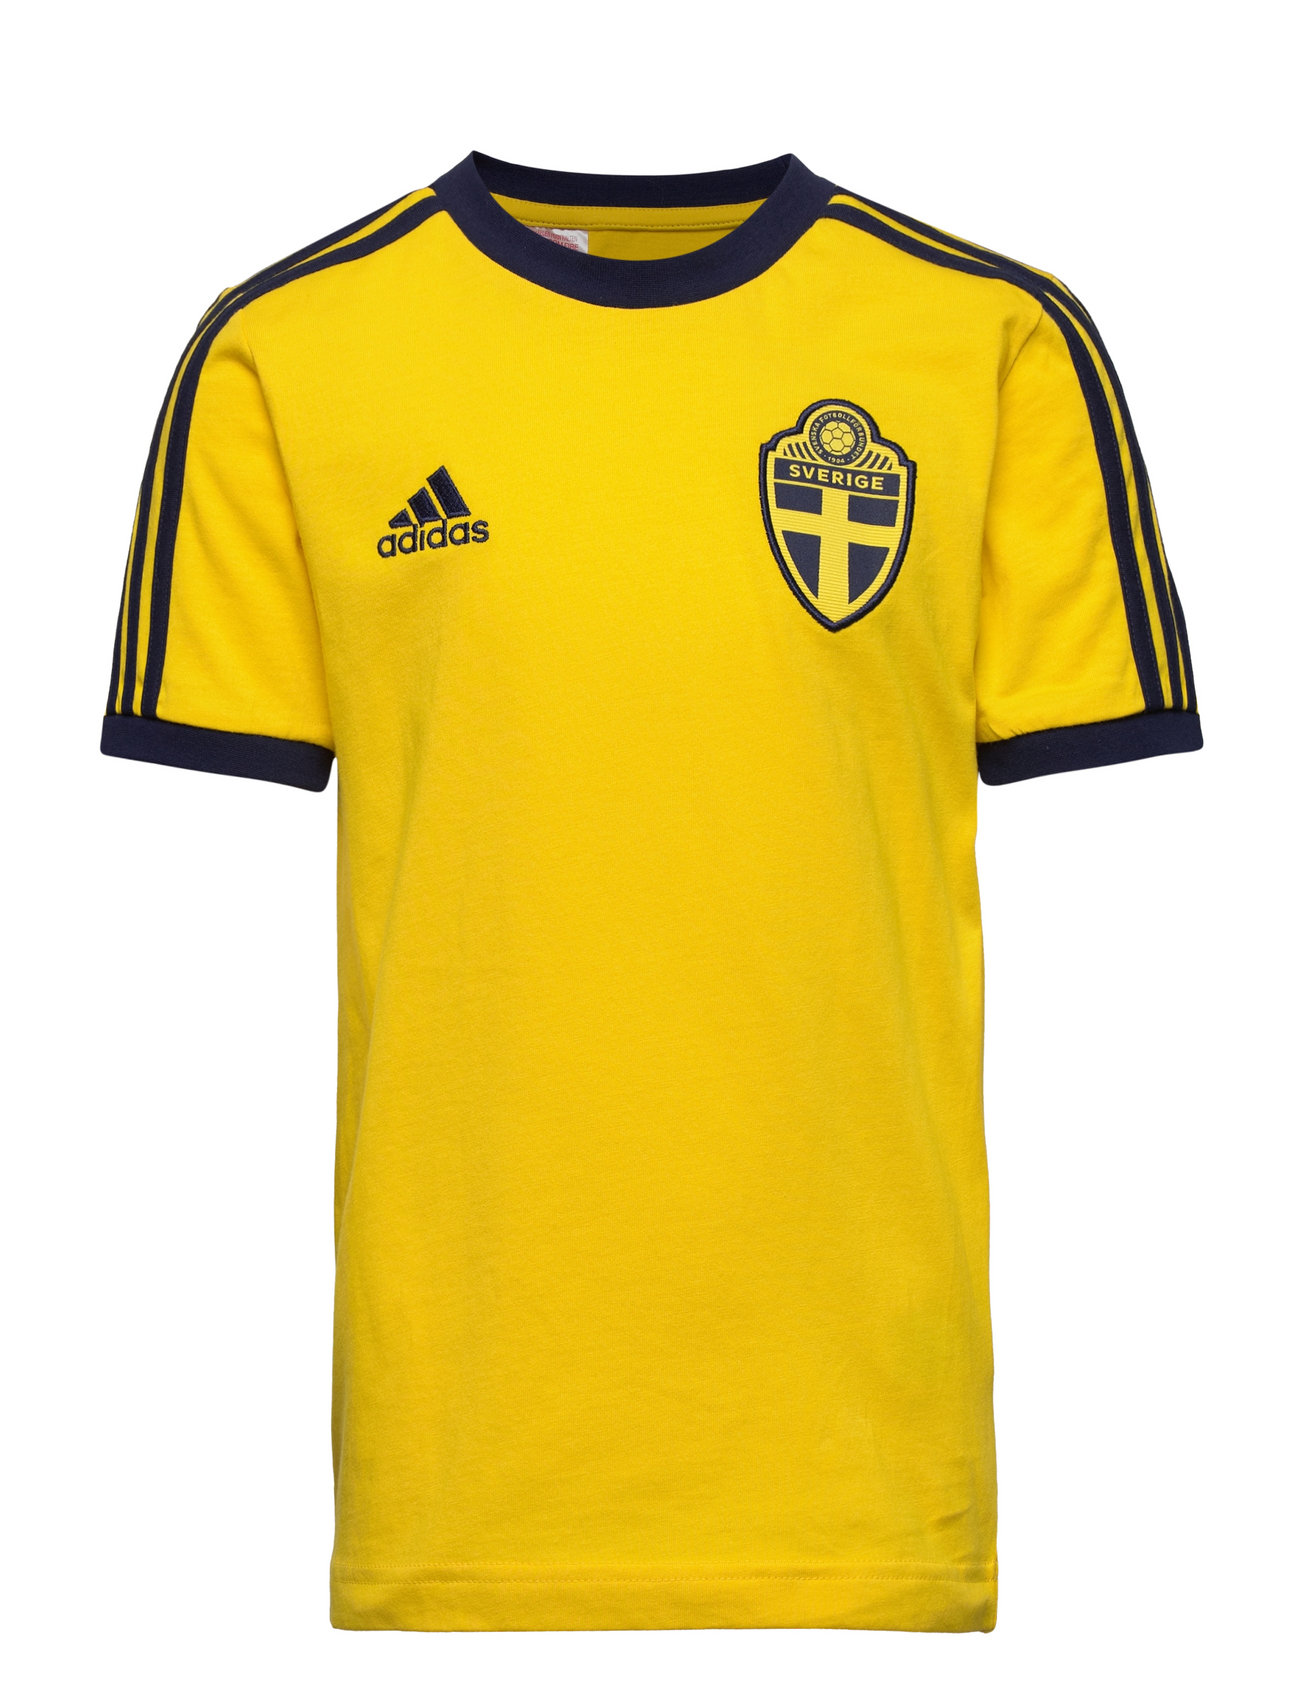 Visiter la boutique adidasadidas Urban Football T-Shirt Mixte Enfant FR : XXS Taille Fabricant : 140 Whtmel/Black 